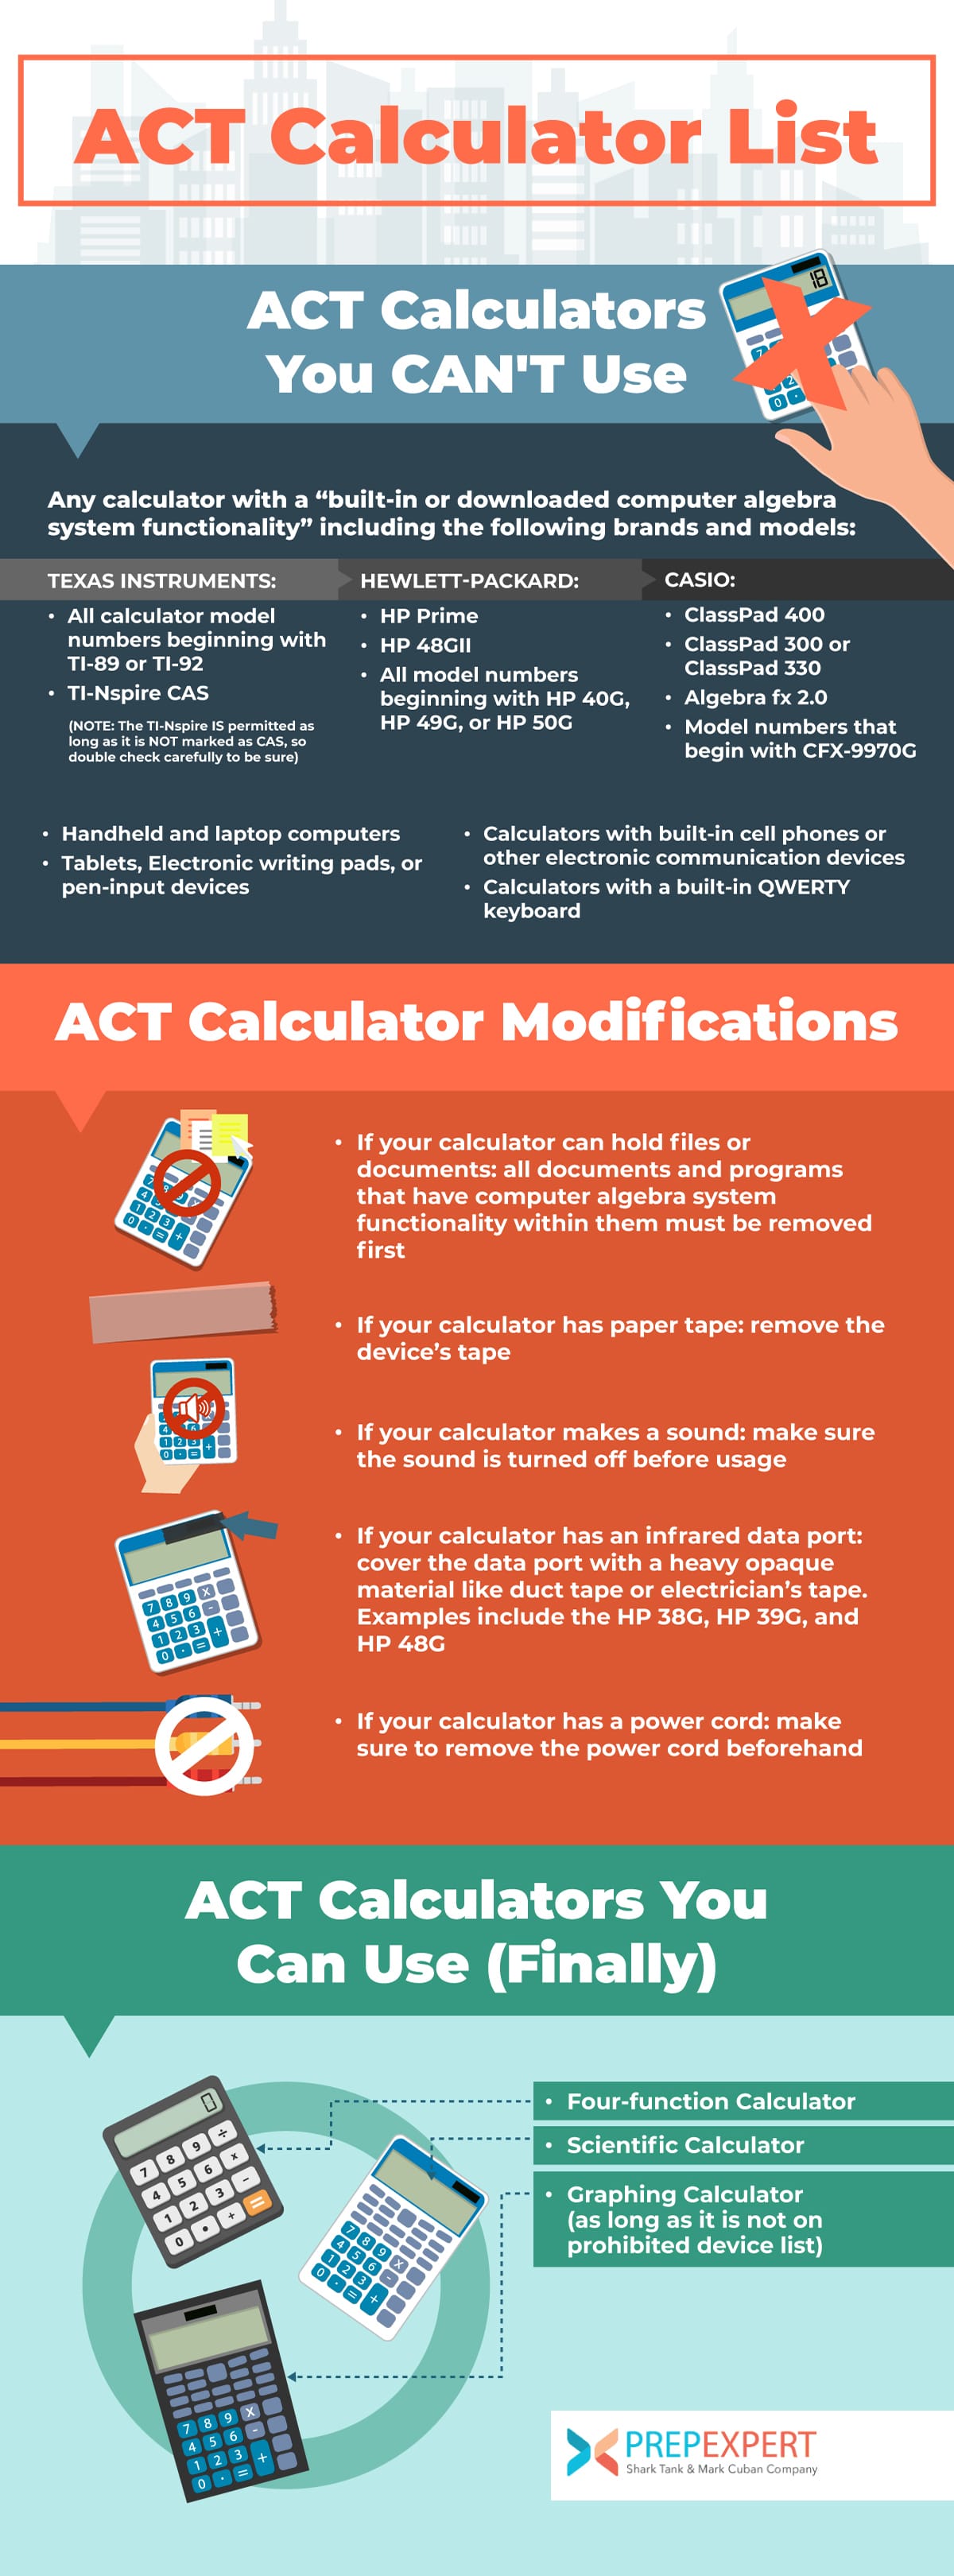 The ACT Calculator List Prep Expert